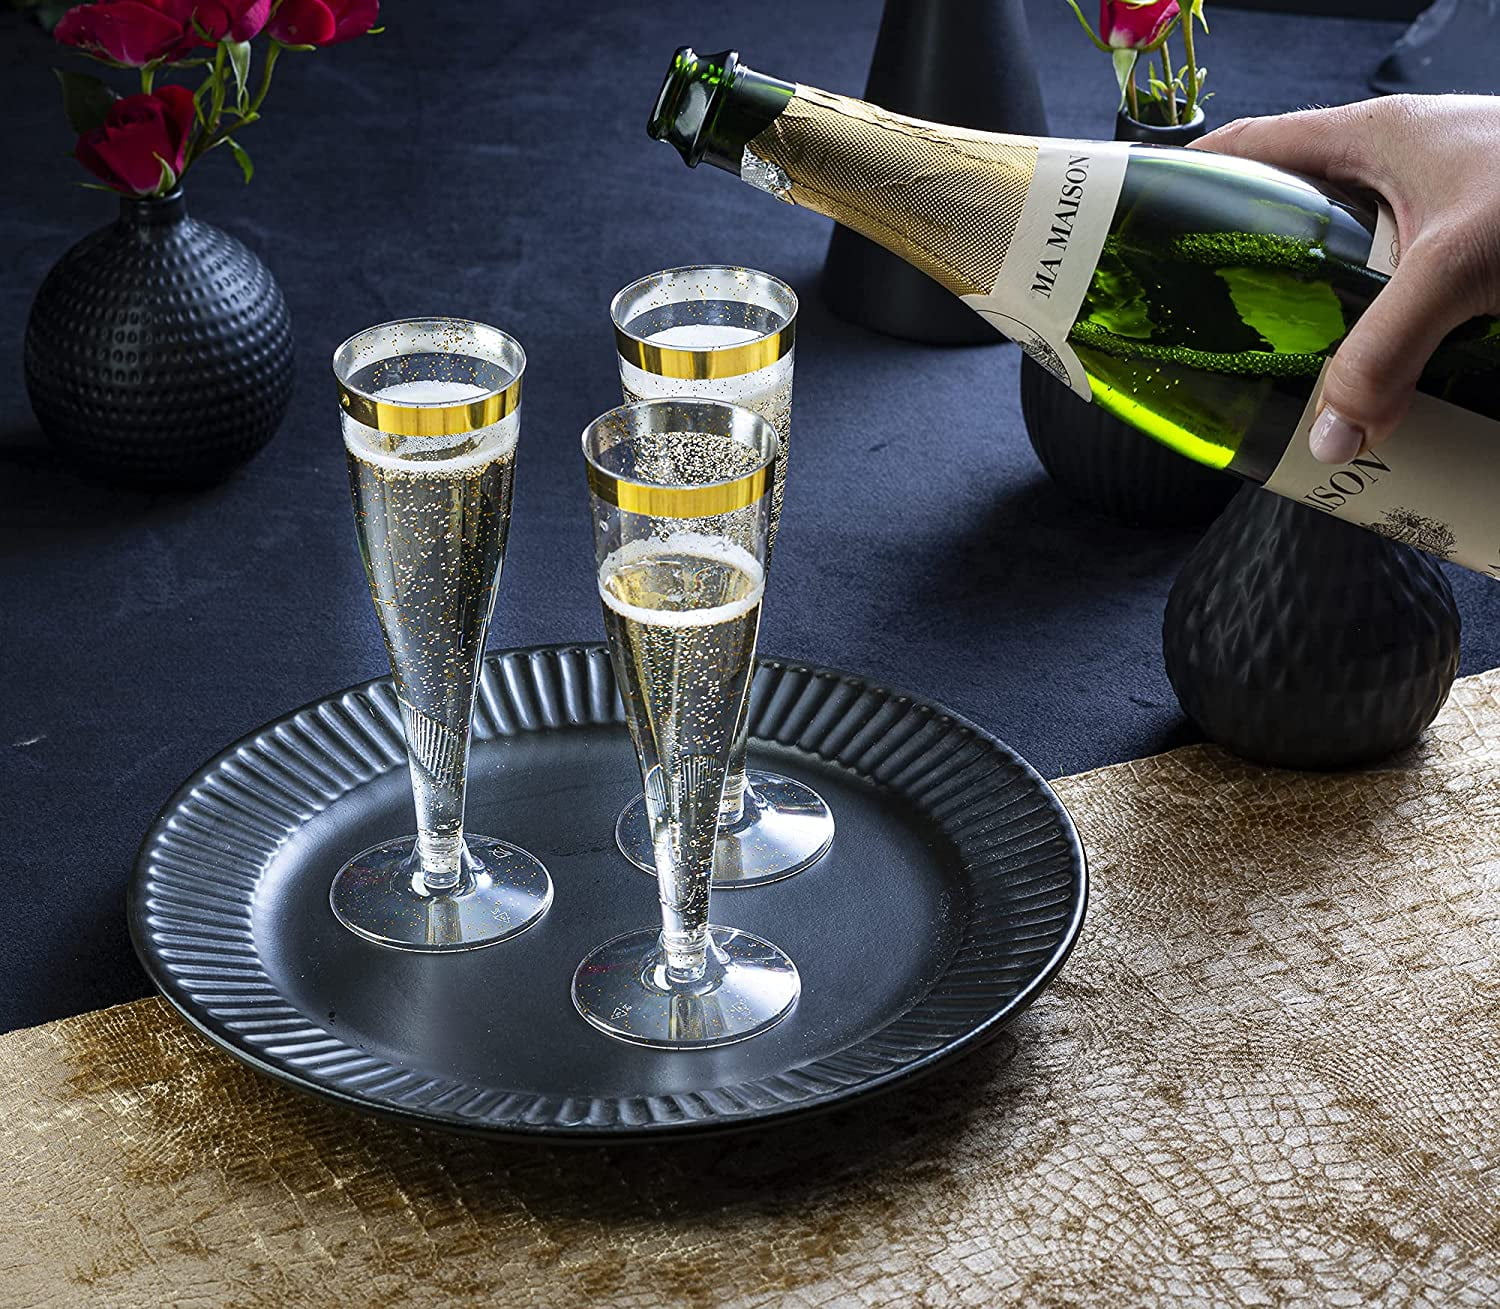 Decorrack 24 Champagne Flutes, Disposable Plastic Champagne Glasses, Size: One Size